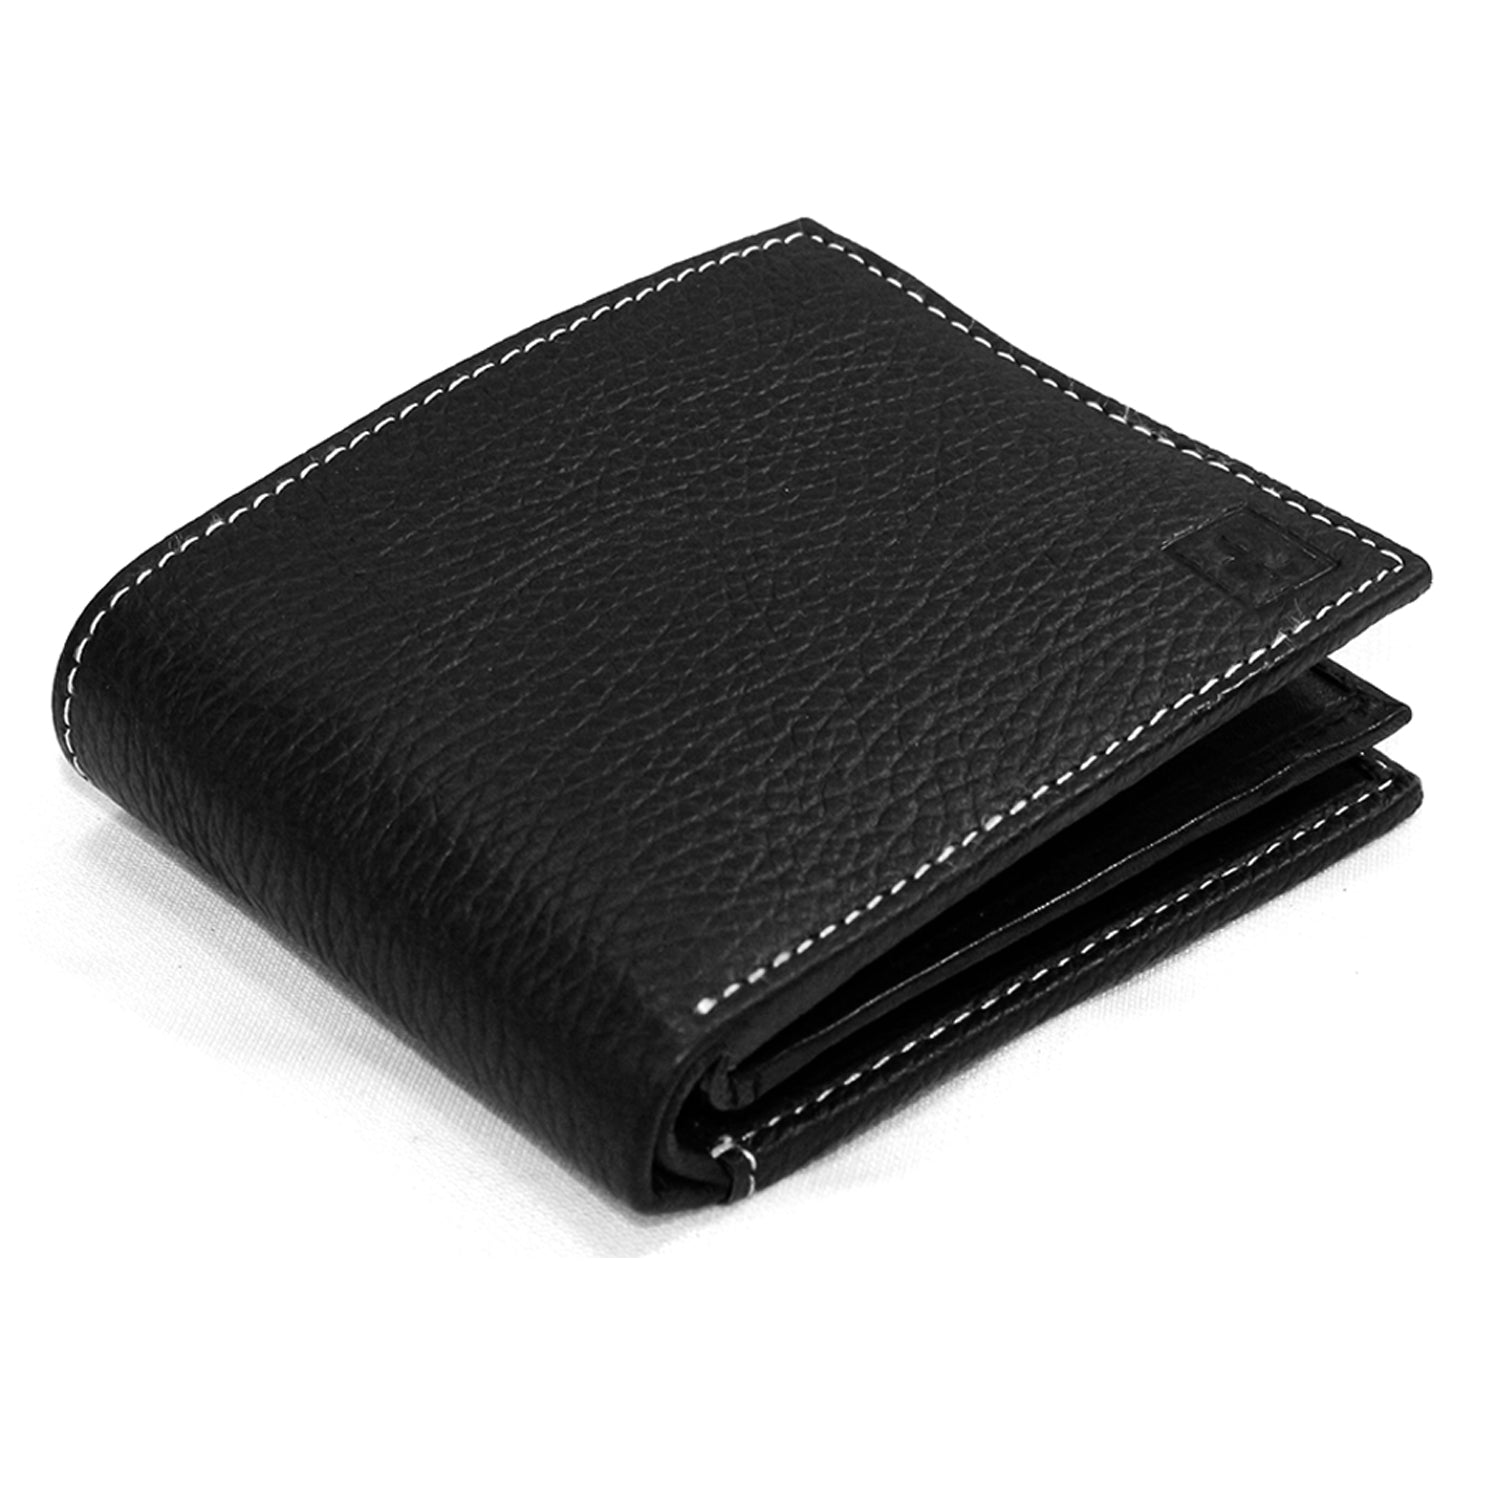 CIMONI® Premium Genuine Leather Wallet for Men Casual Wallet with RFID Protection 12 Card 1 Id Slots Slim Elegant Design Wallet (Color - Black)